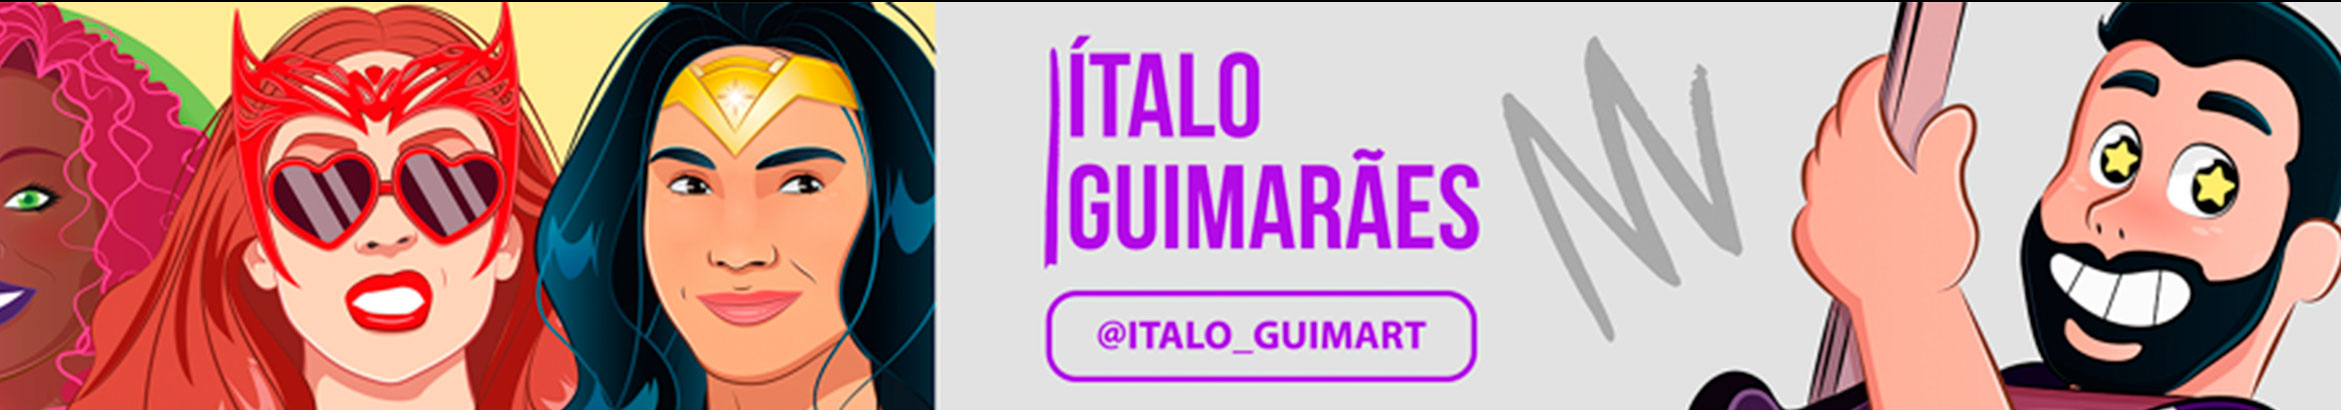 Ítalo Guimarães's profile banner